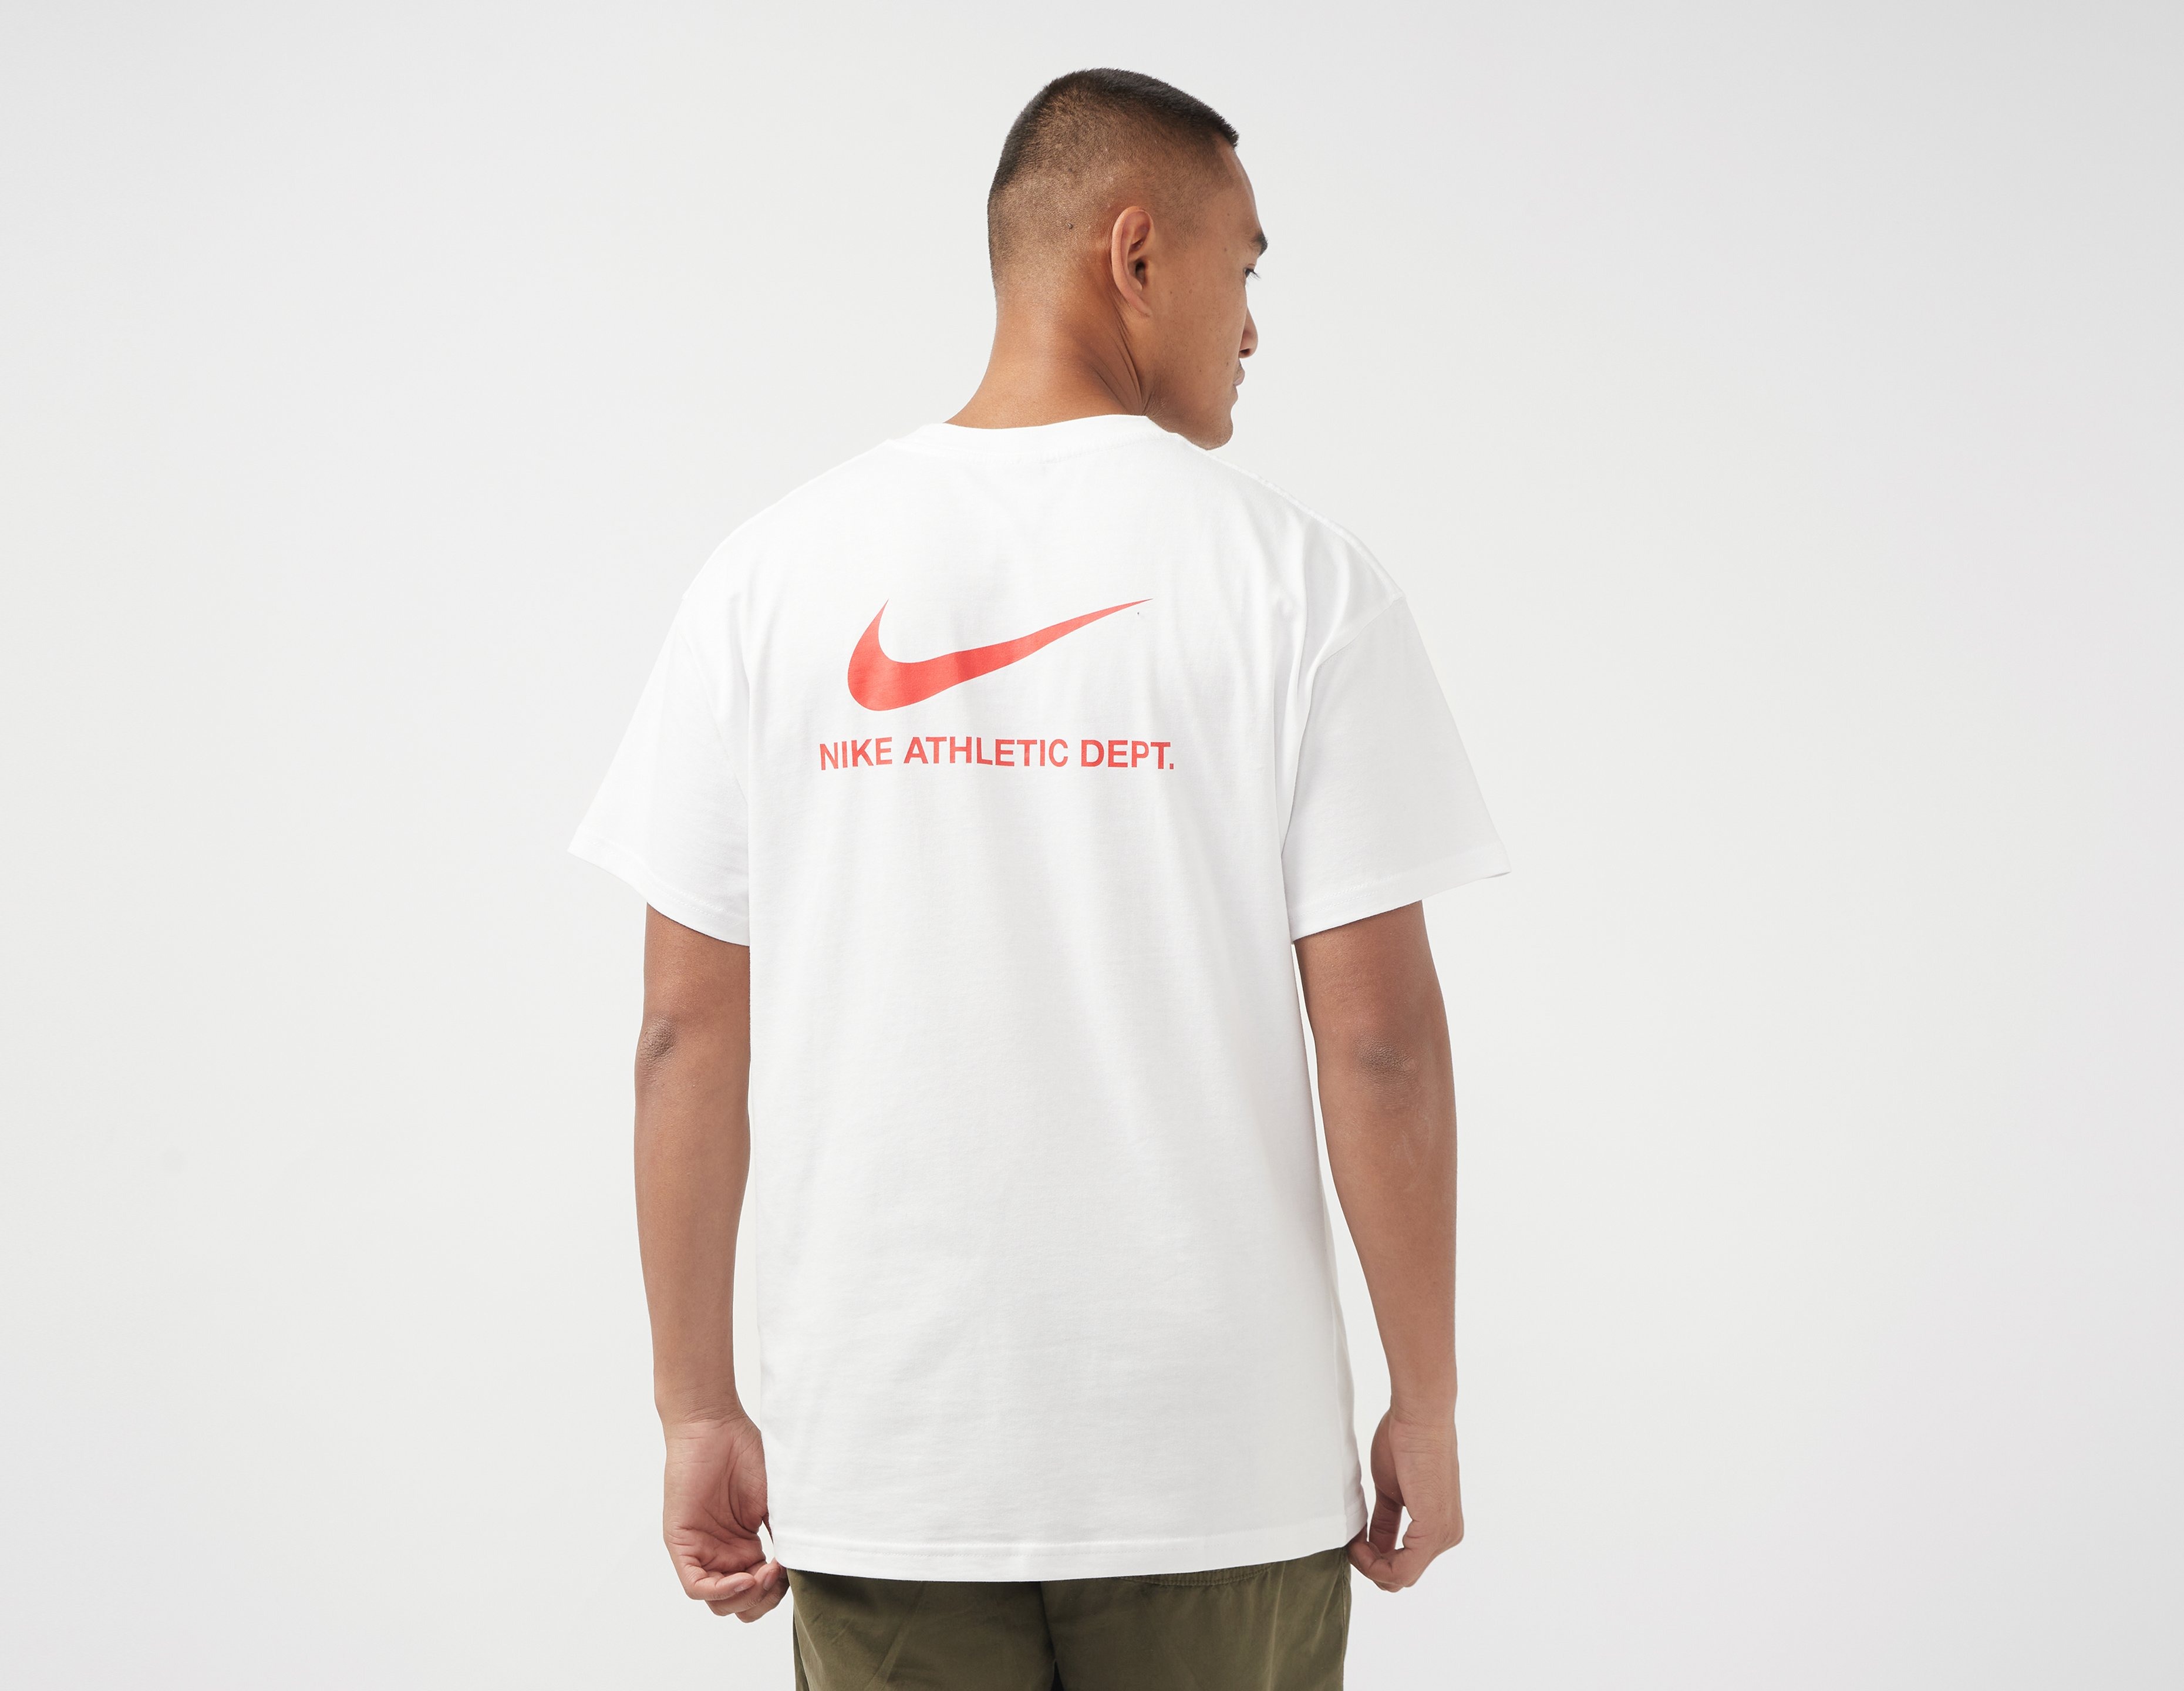 Sportswear sepia Graphic stone | Nike Shirt air - White T max 270 Healthdesign? -